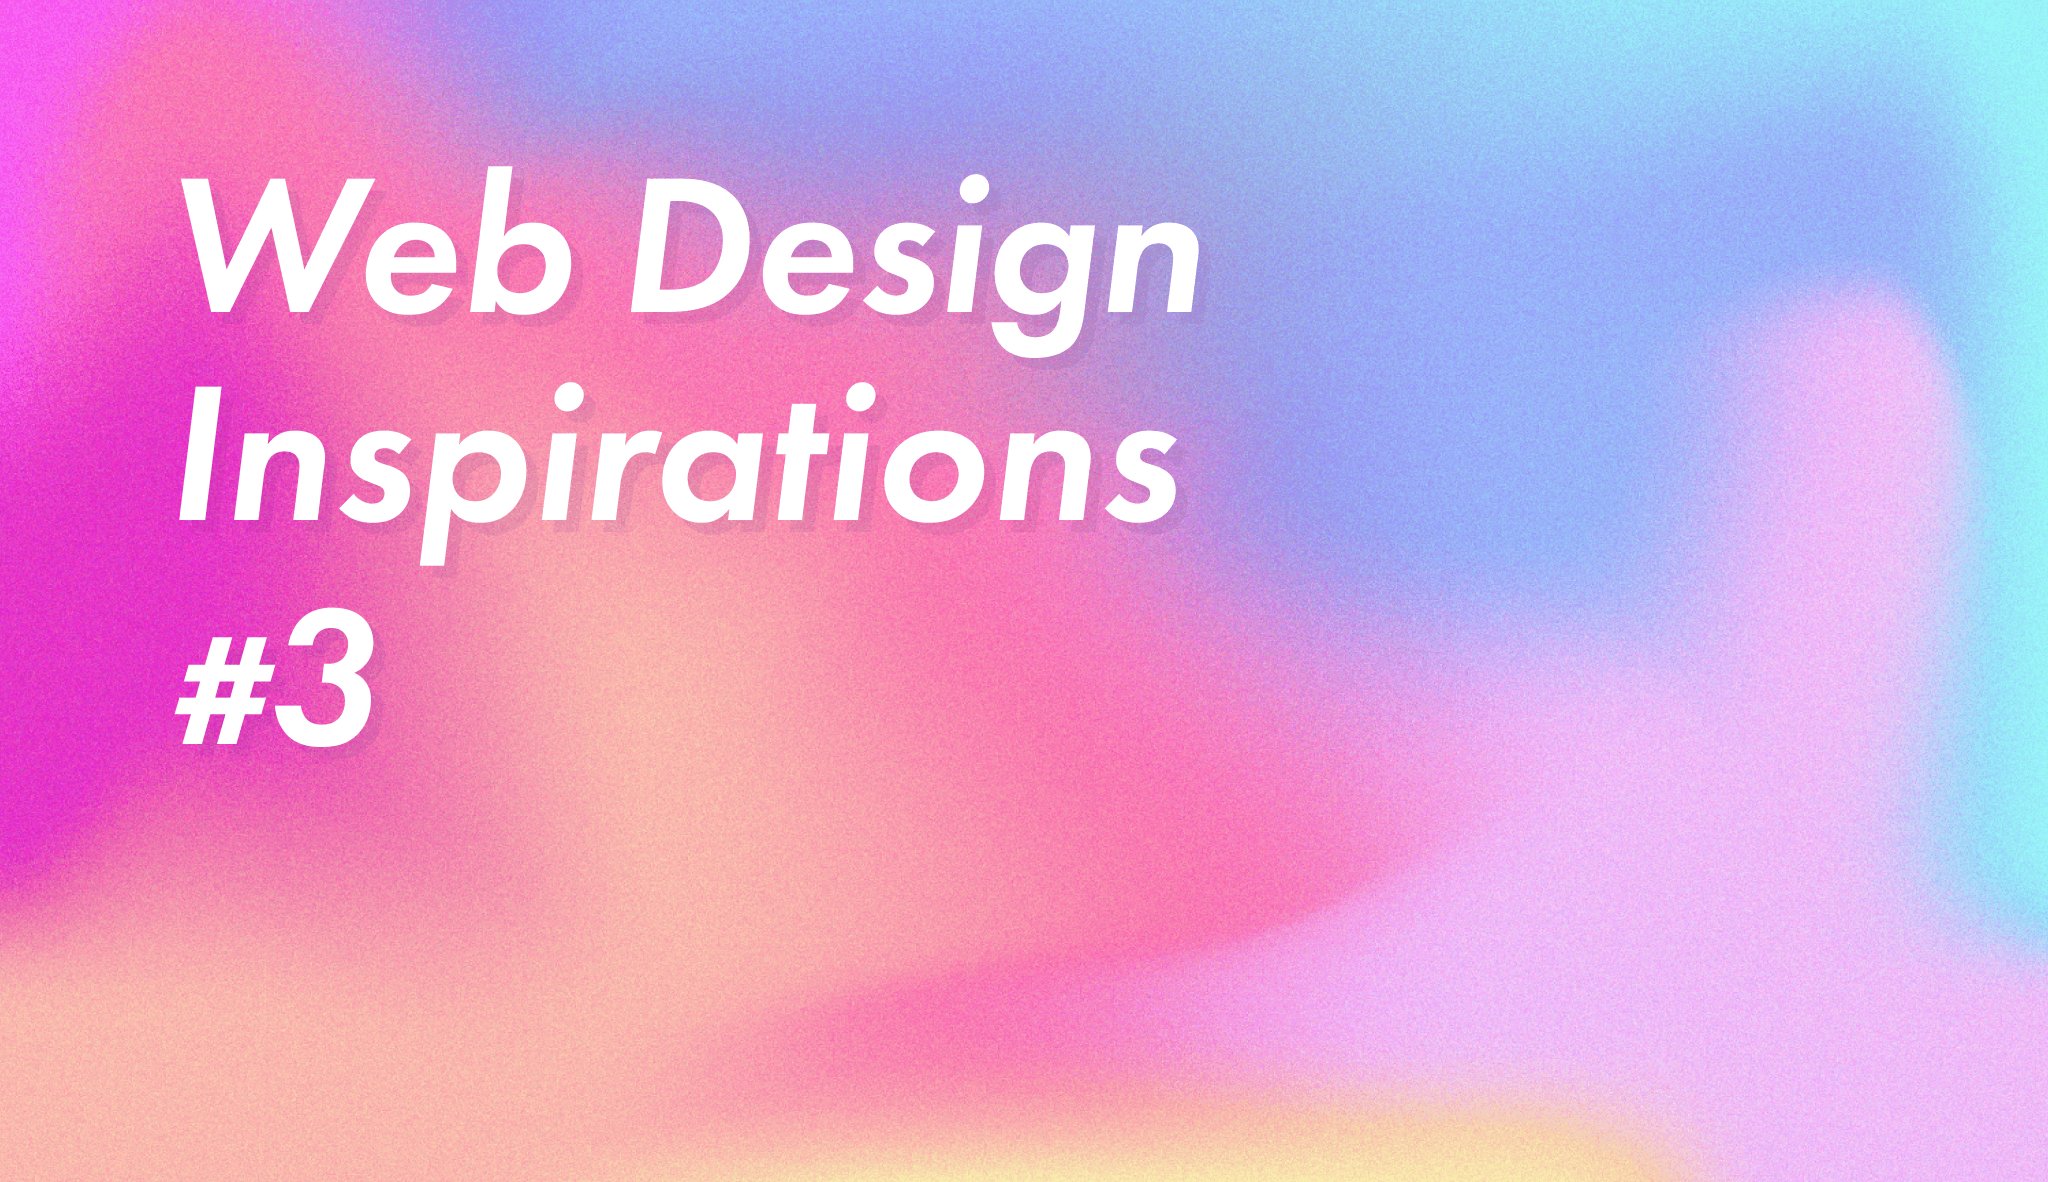 Web Design Inspirations #3